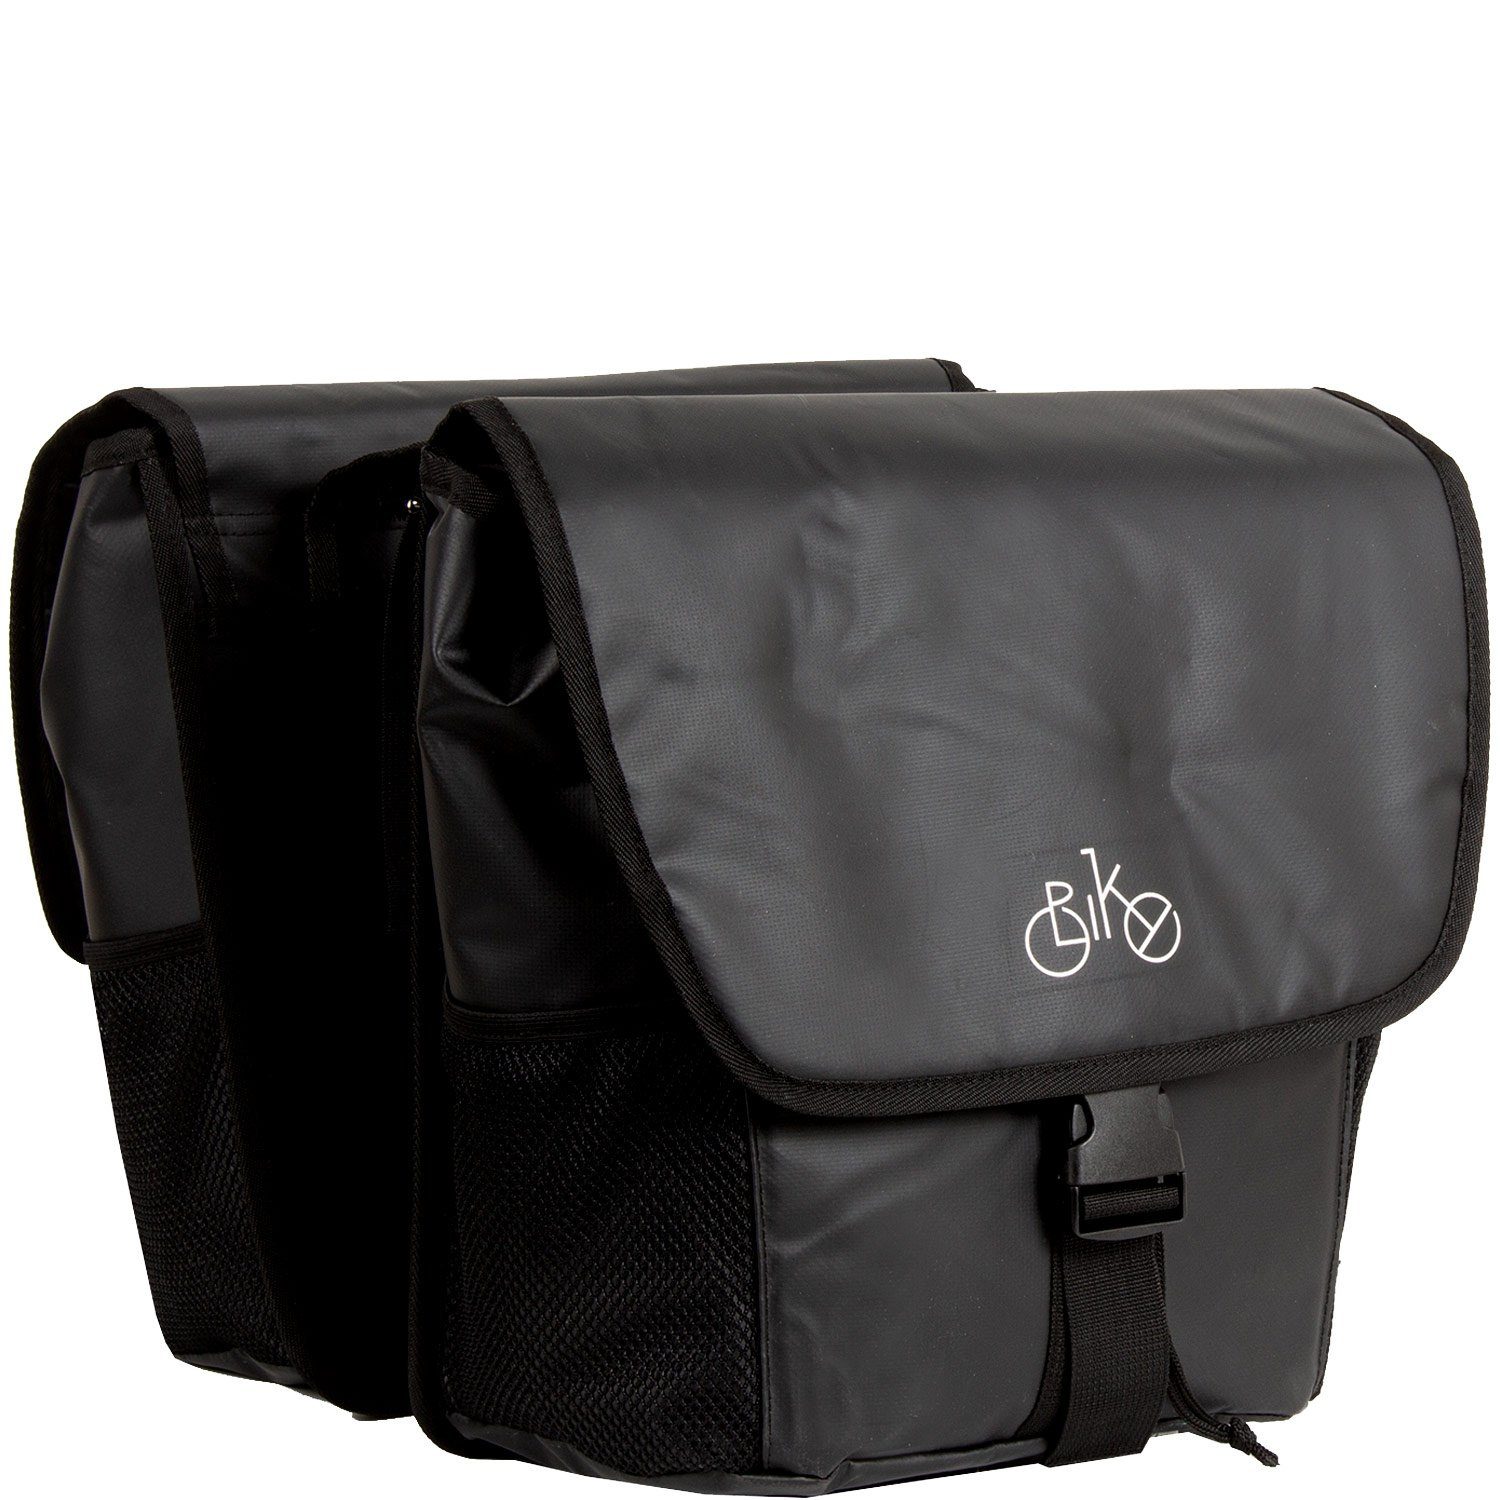 Carbon New NEW REBELS Fahrradtaschen bag (Paar) black planner Reisetasche side 2 Rebels